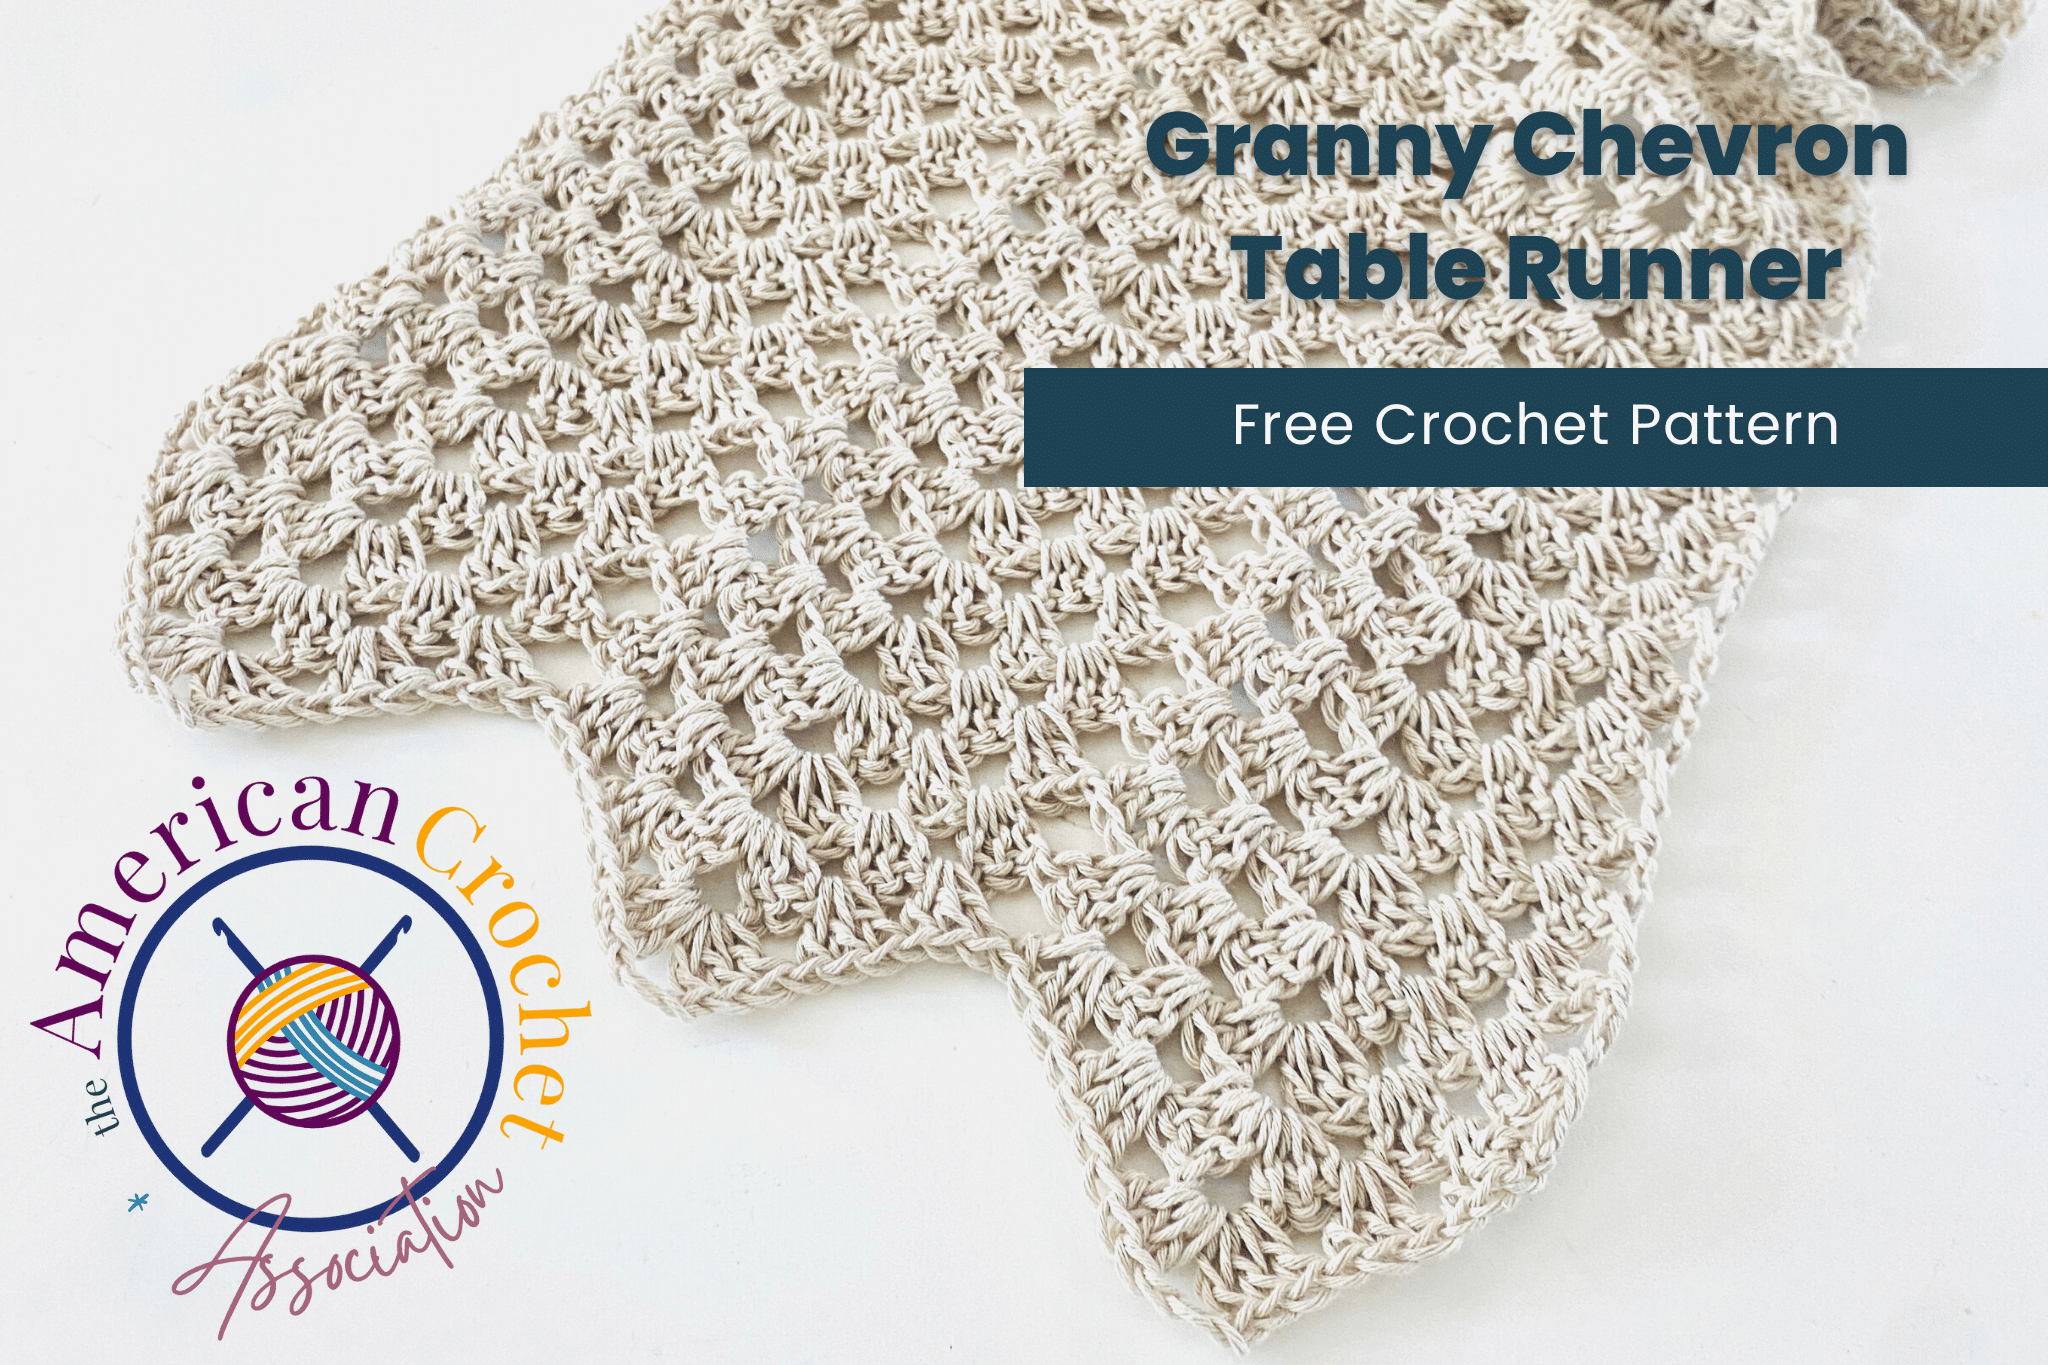 Granny stitch table runner